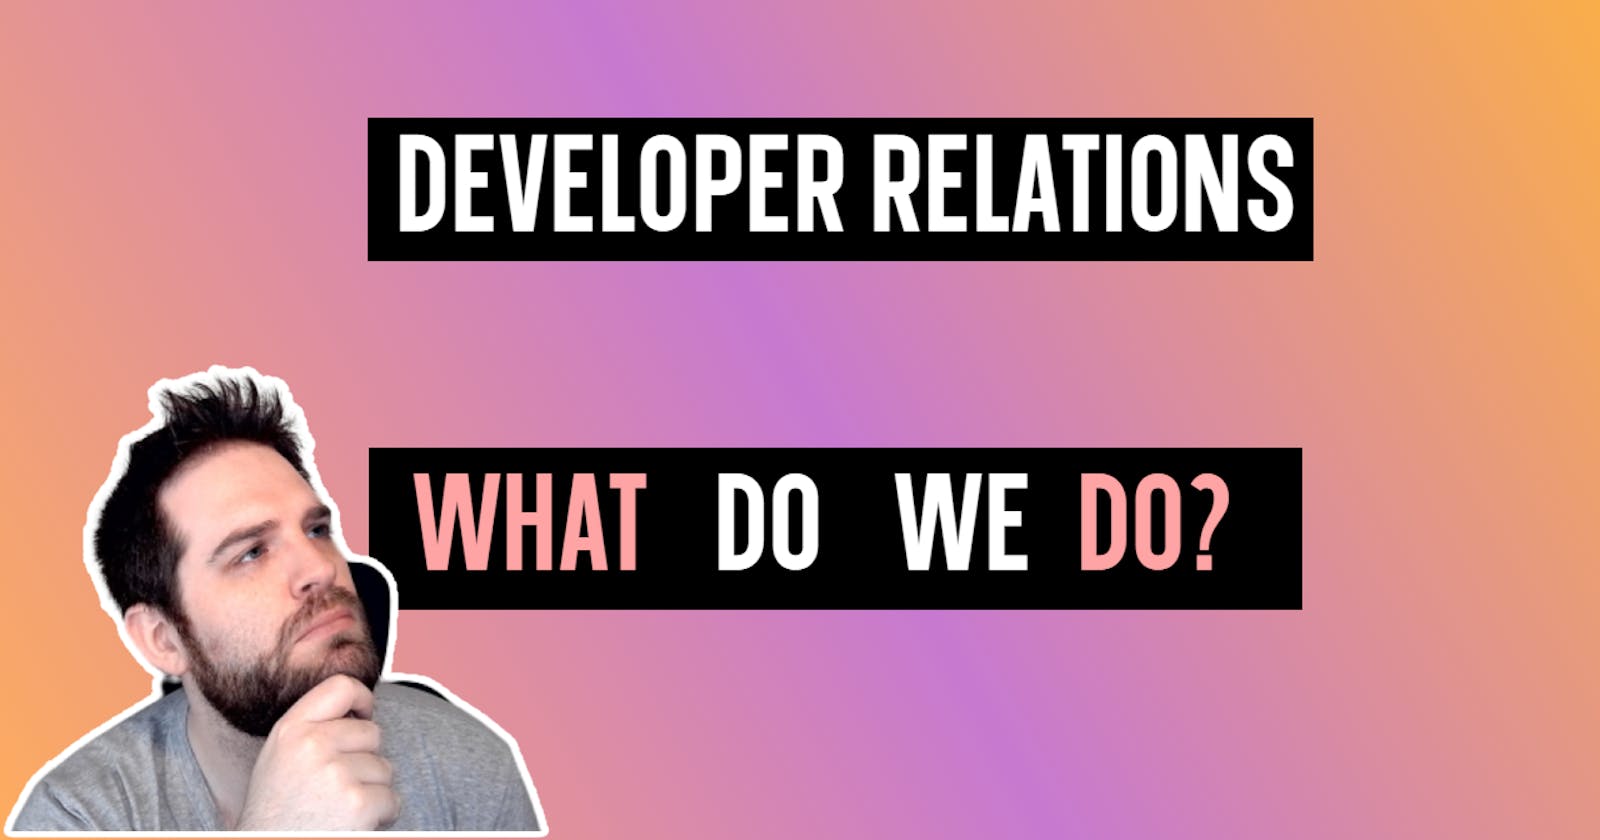 Developer Relations what do we do?